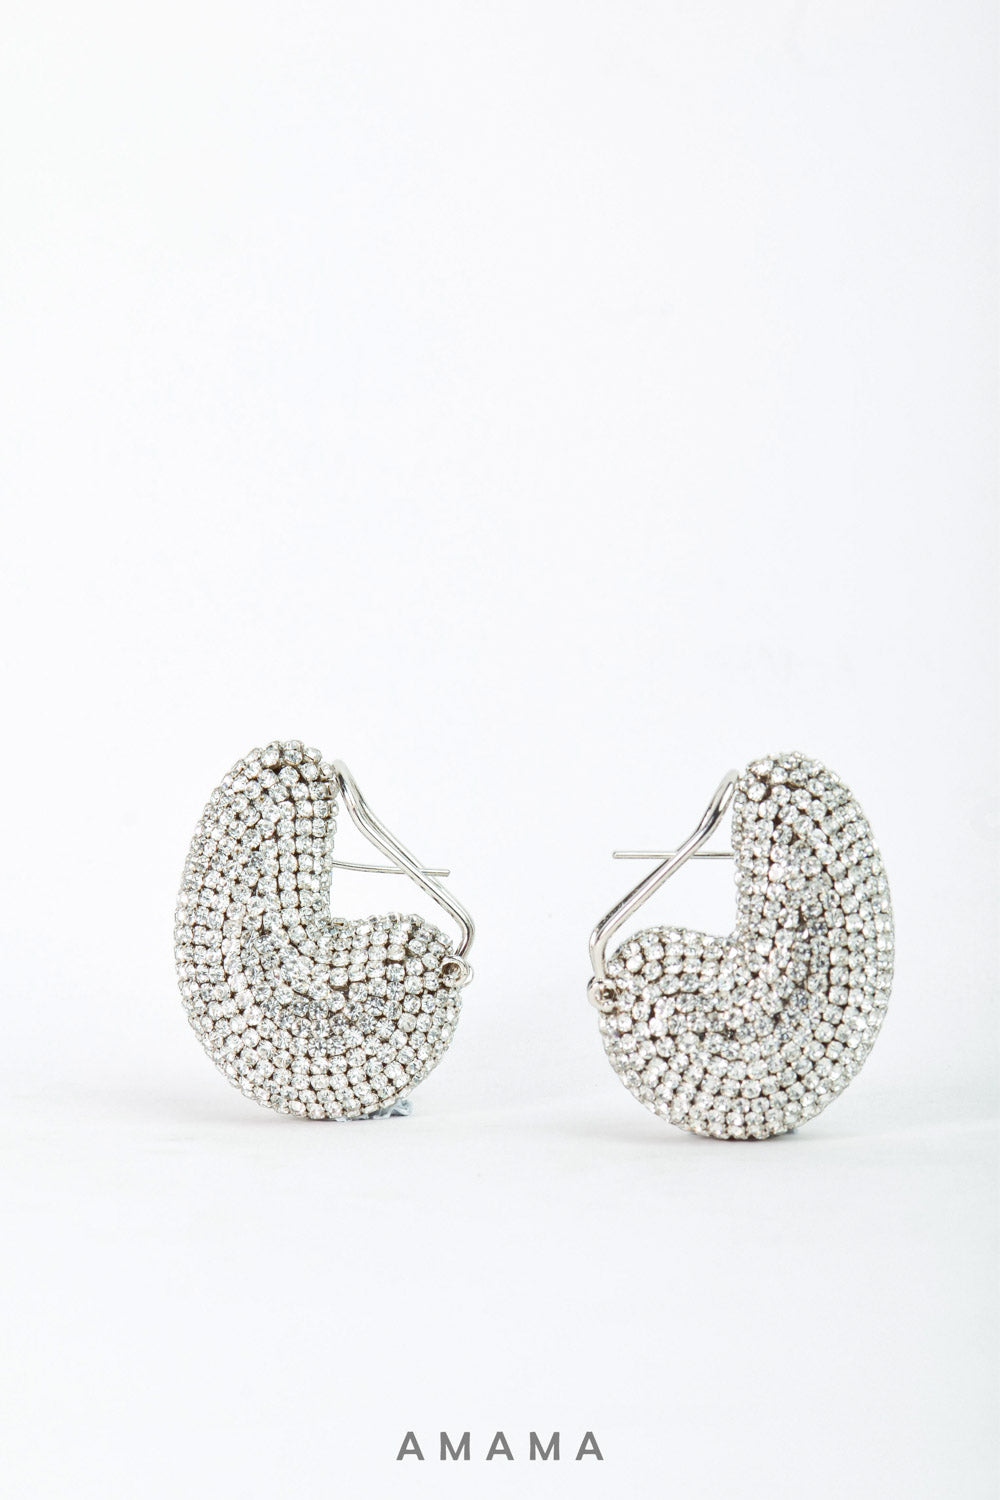 Amama,Kaju Earrings In Sparkling White